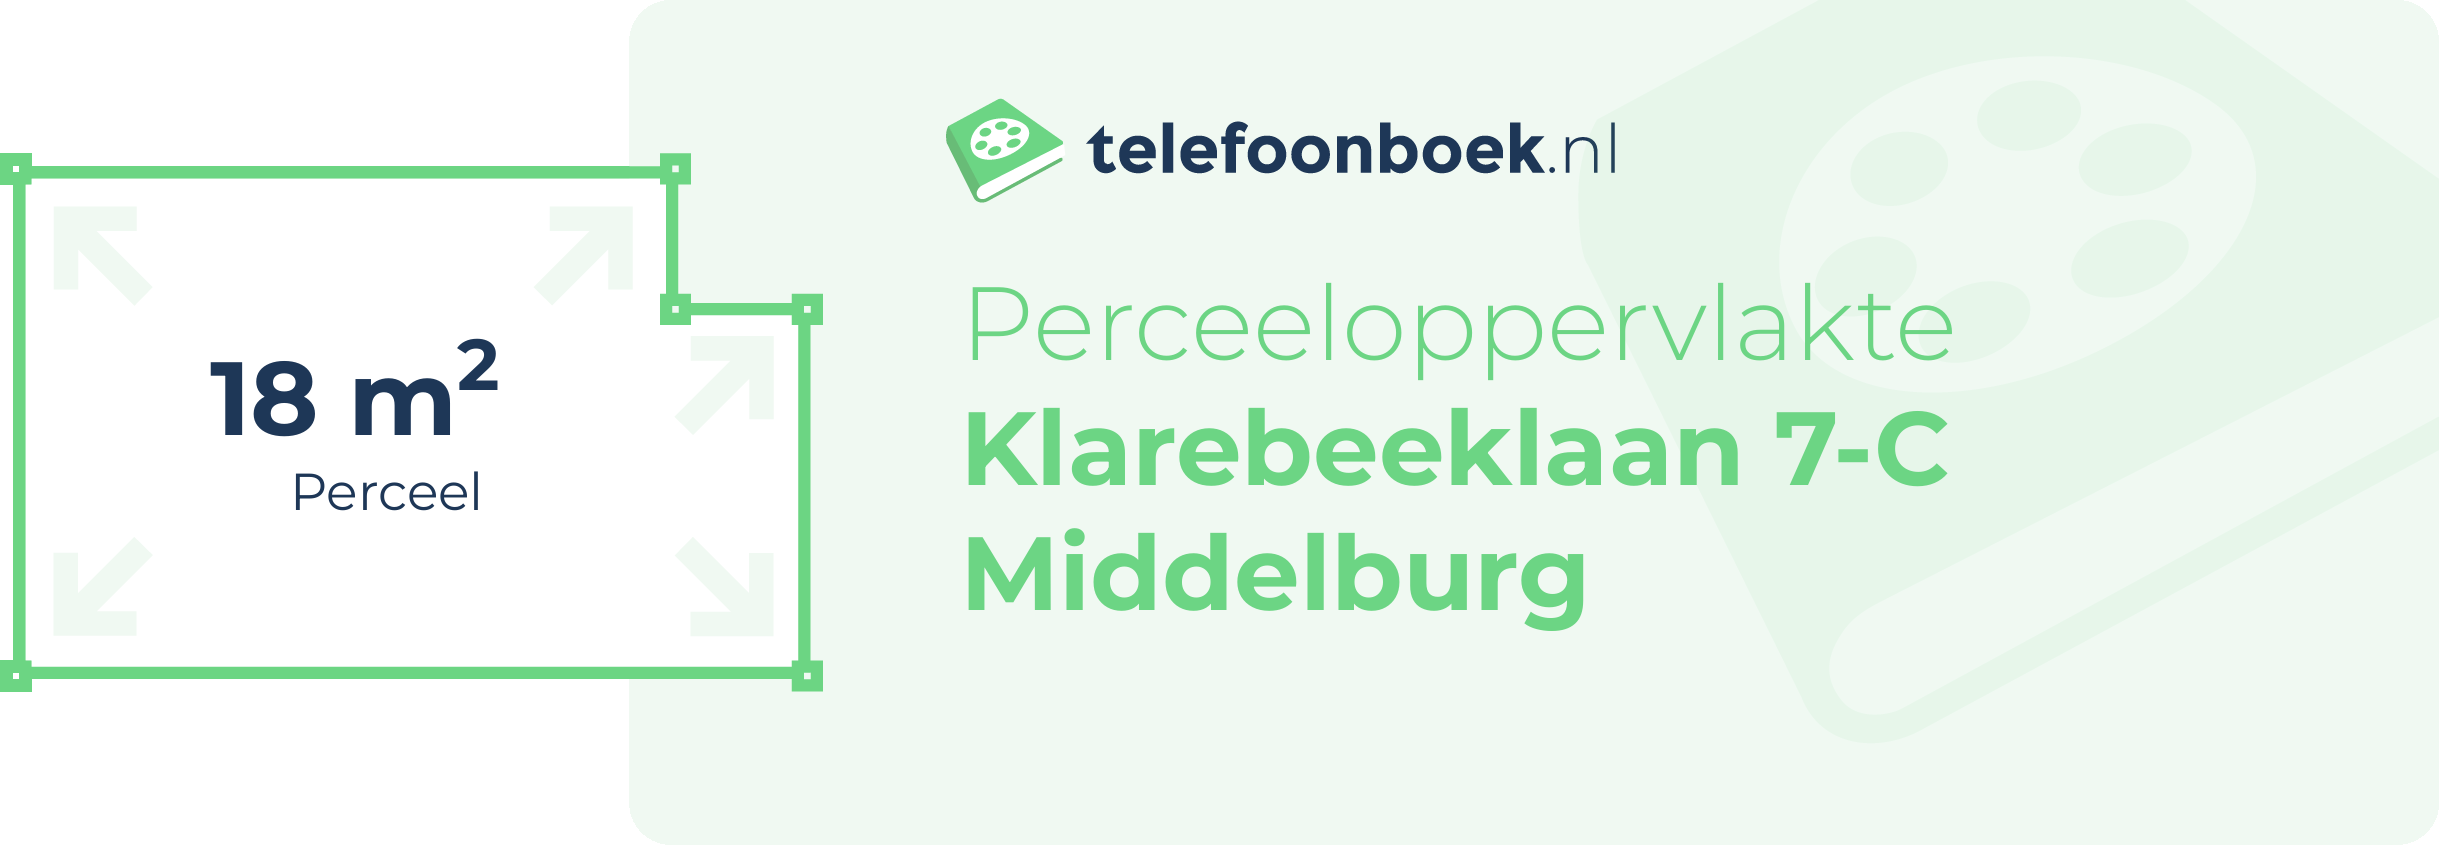 Perceeloppervlakte Klarebeeklaan 7-C Middelburg